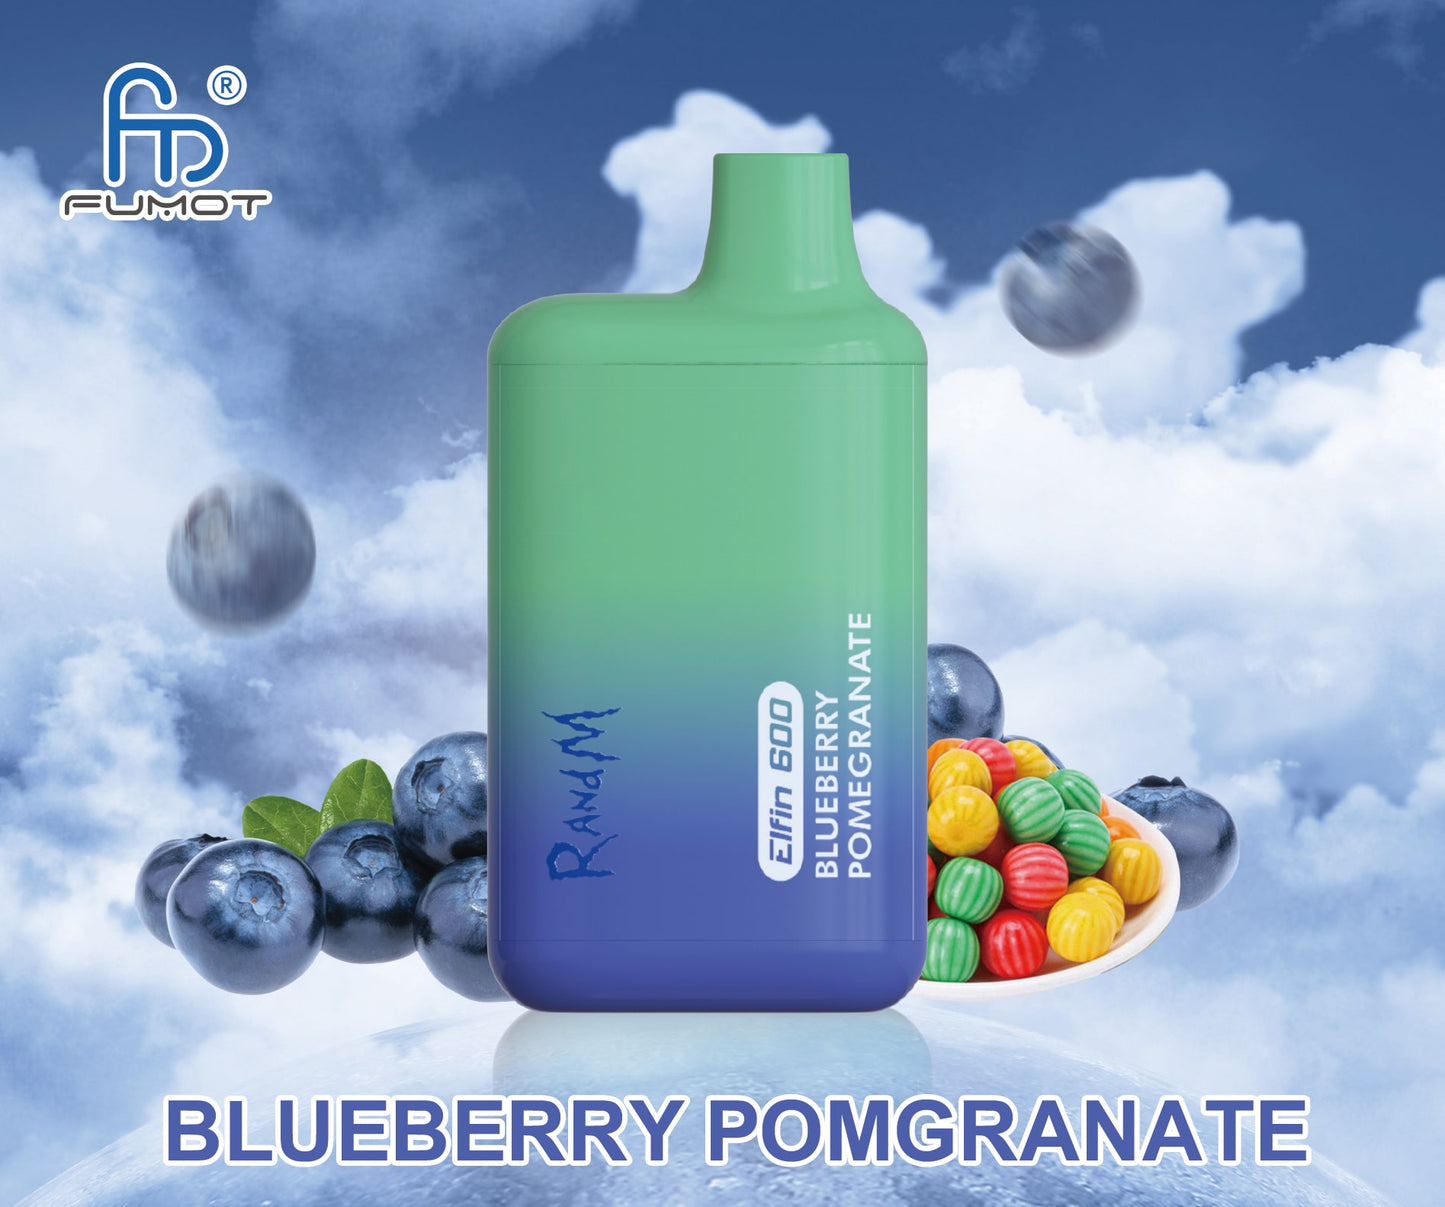 Blueberry Pomgranate